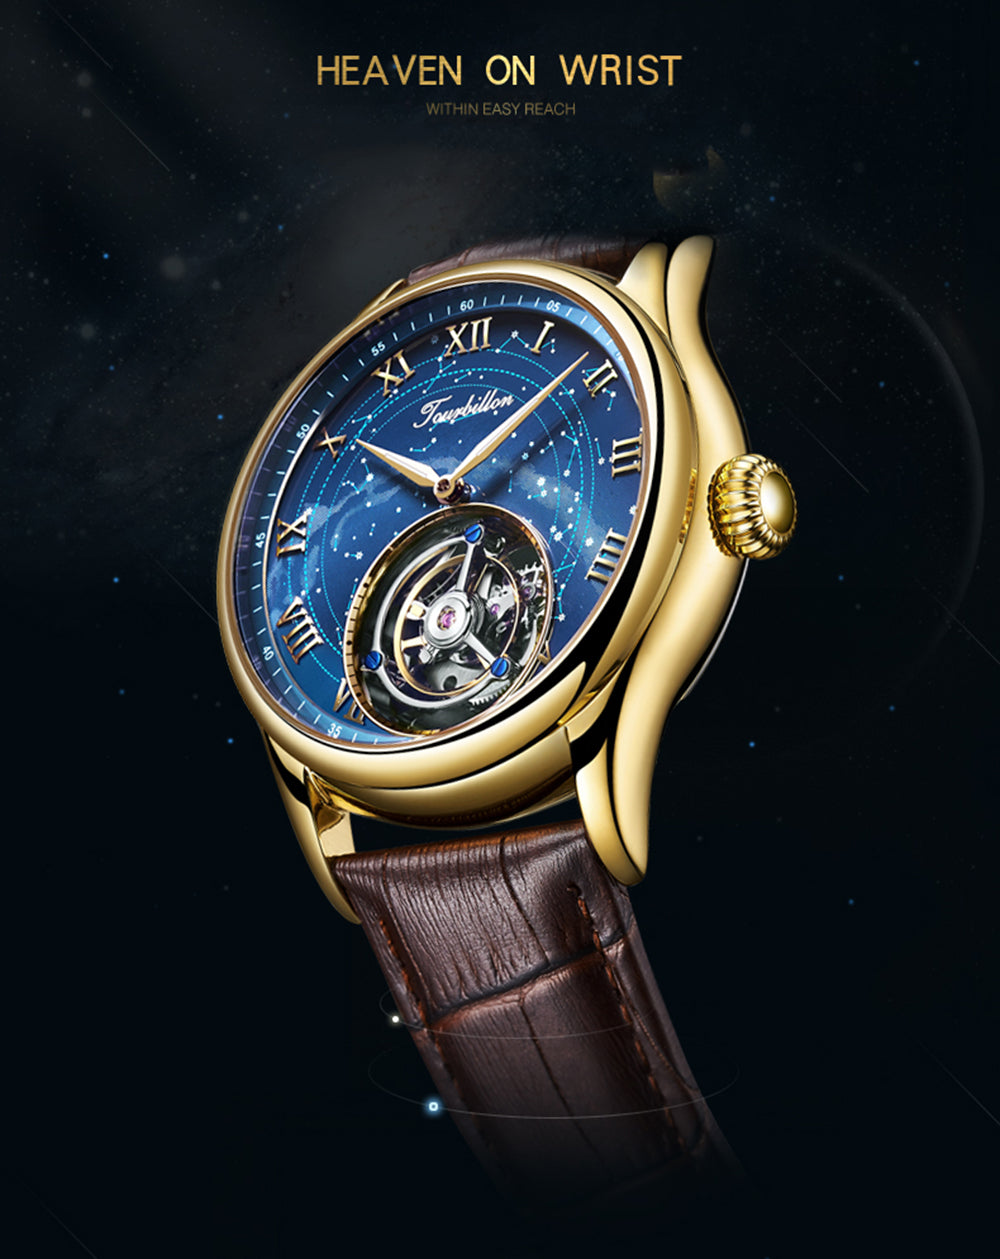 Aesop Original High quality Tourbillon Star Galaxy Watch 7006